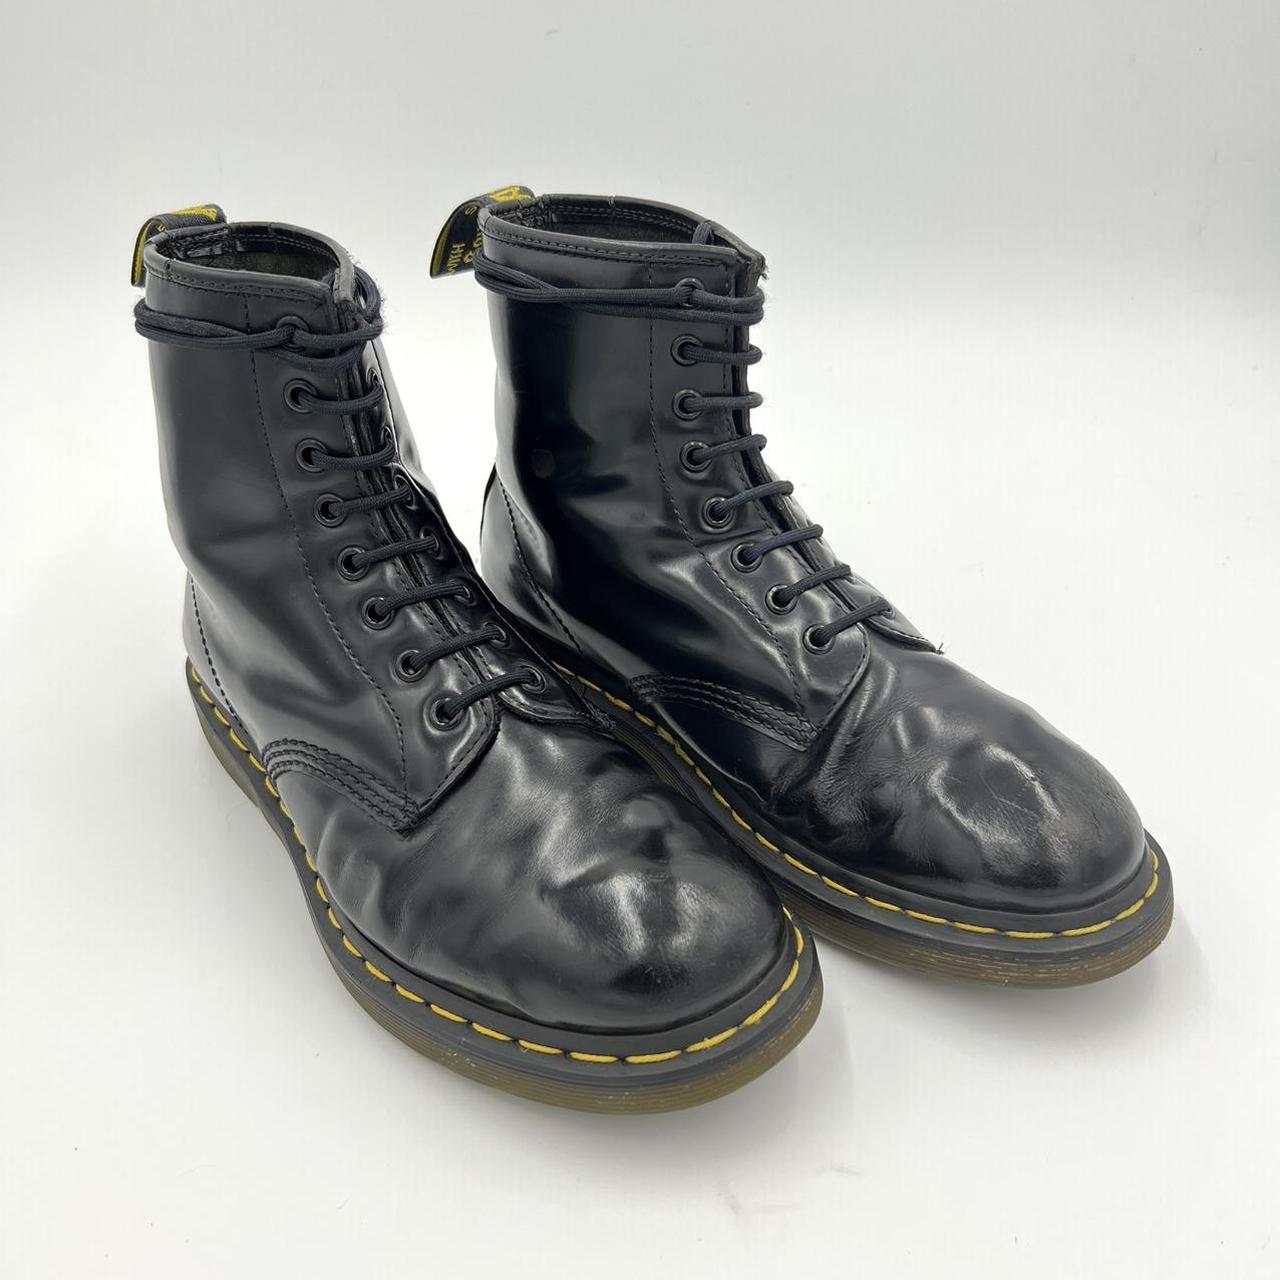 Dr. Martens Men's Black and Yellow Boots | Depop